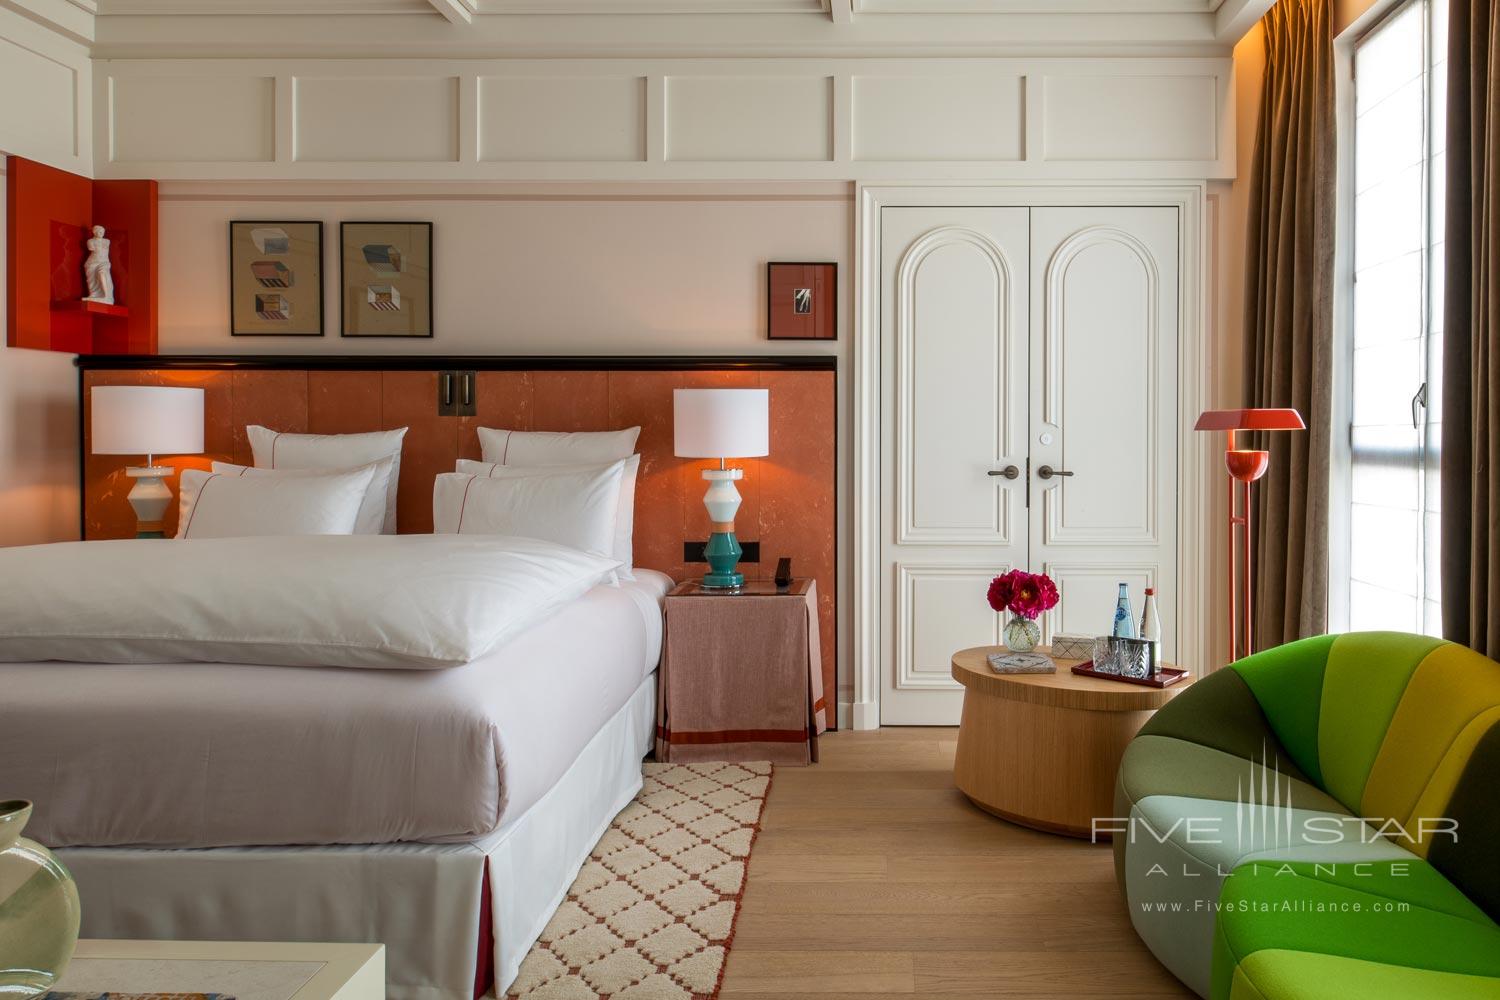 Deluxe Guest Room at Sinner Hotel, Paris